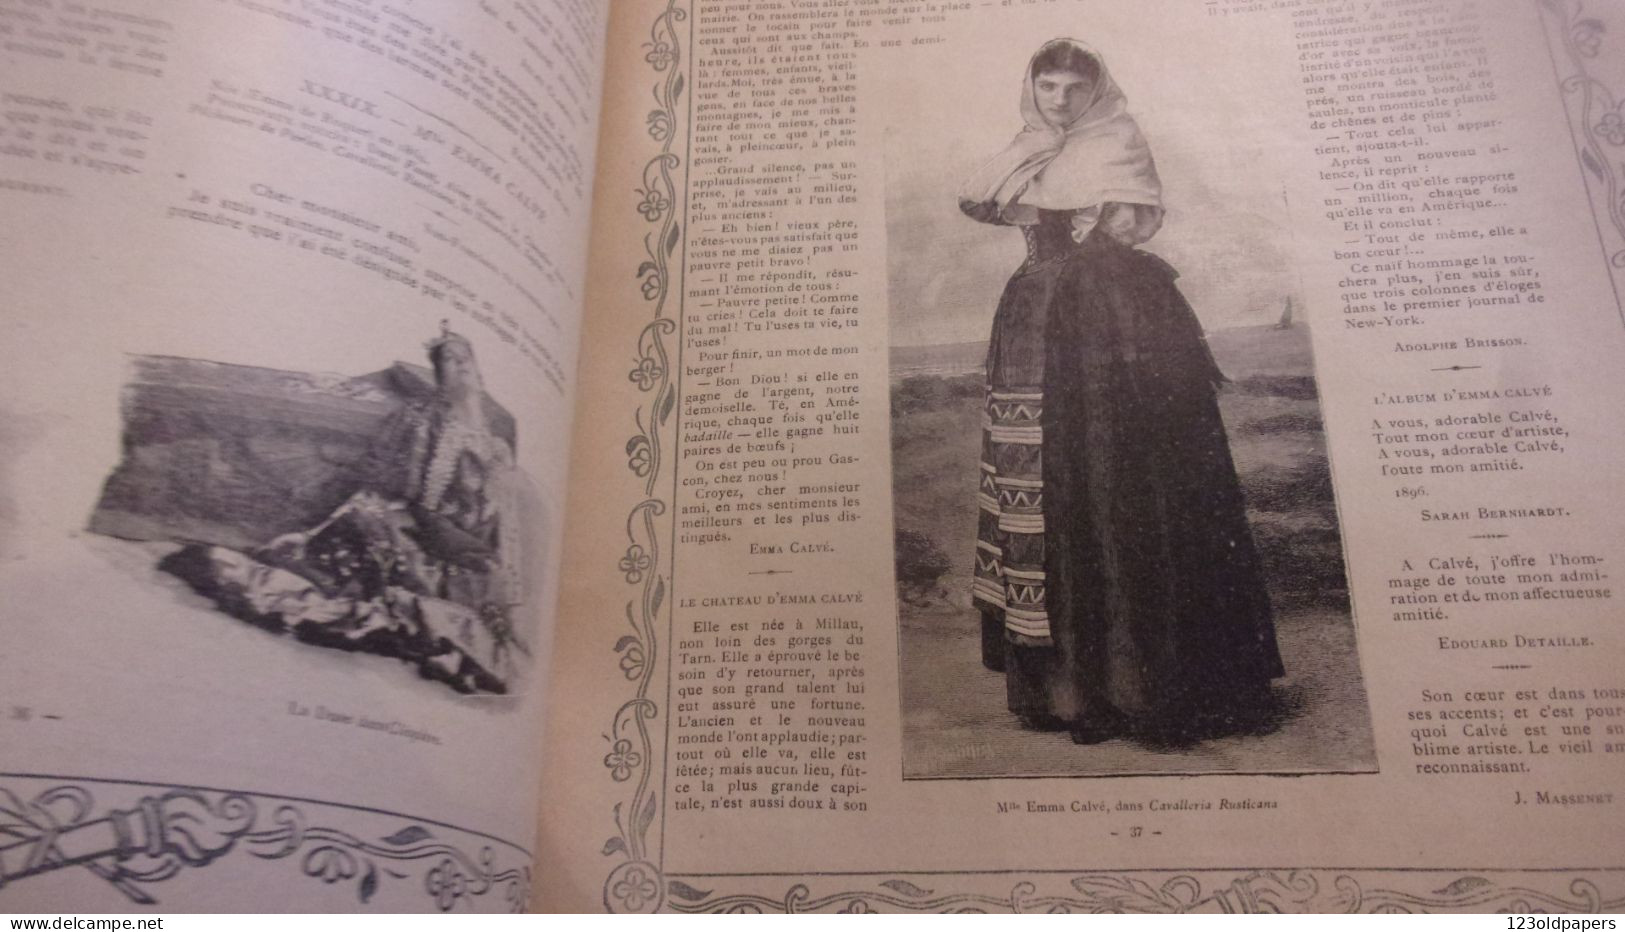 1902 L ACADEMIE DES FEMMES EMMA CALVE SARAH BERNHARDT ELEONORA DUSE ... - Magazines - Before 1900